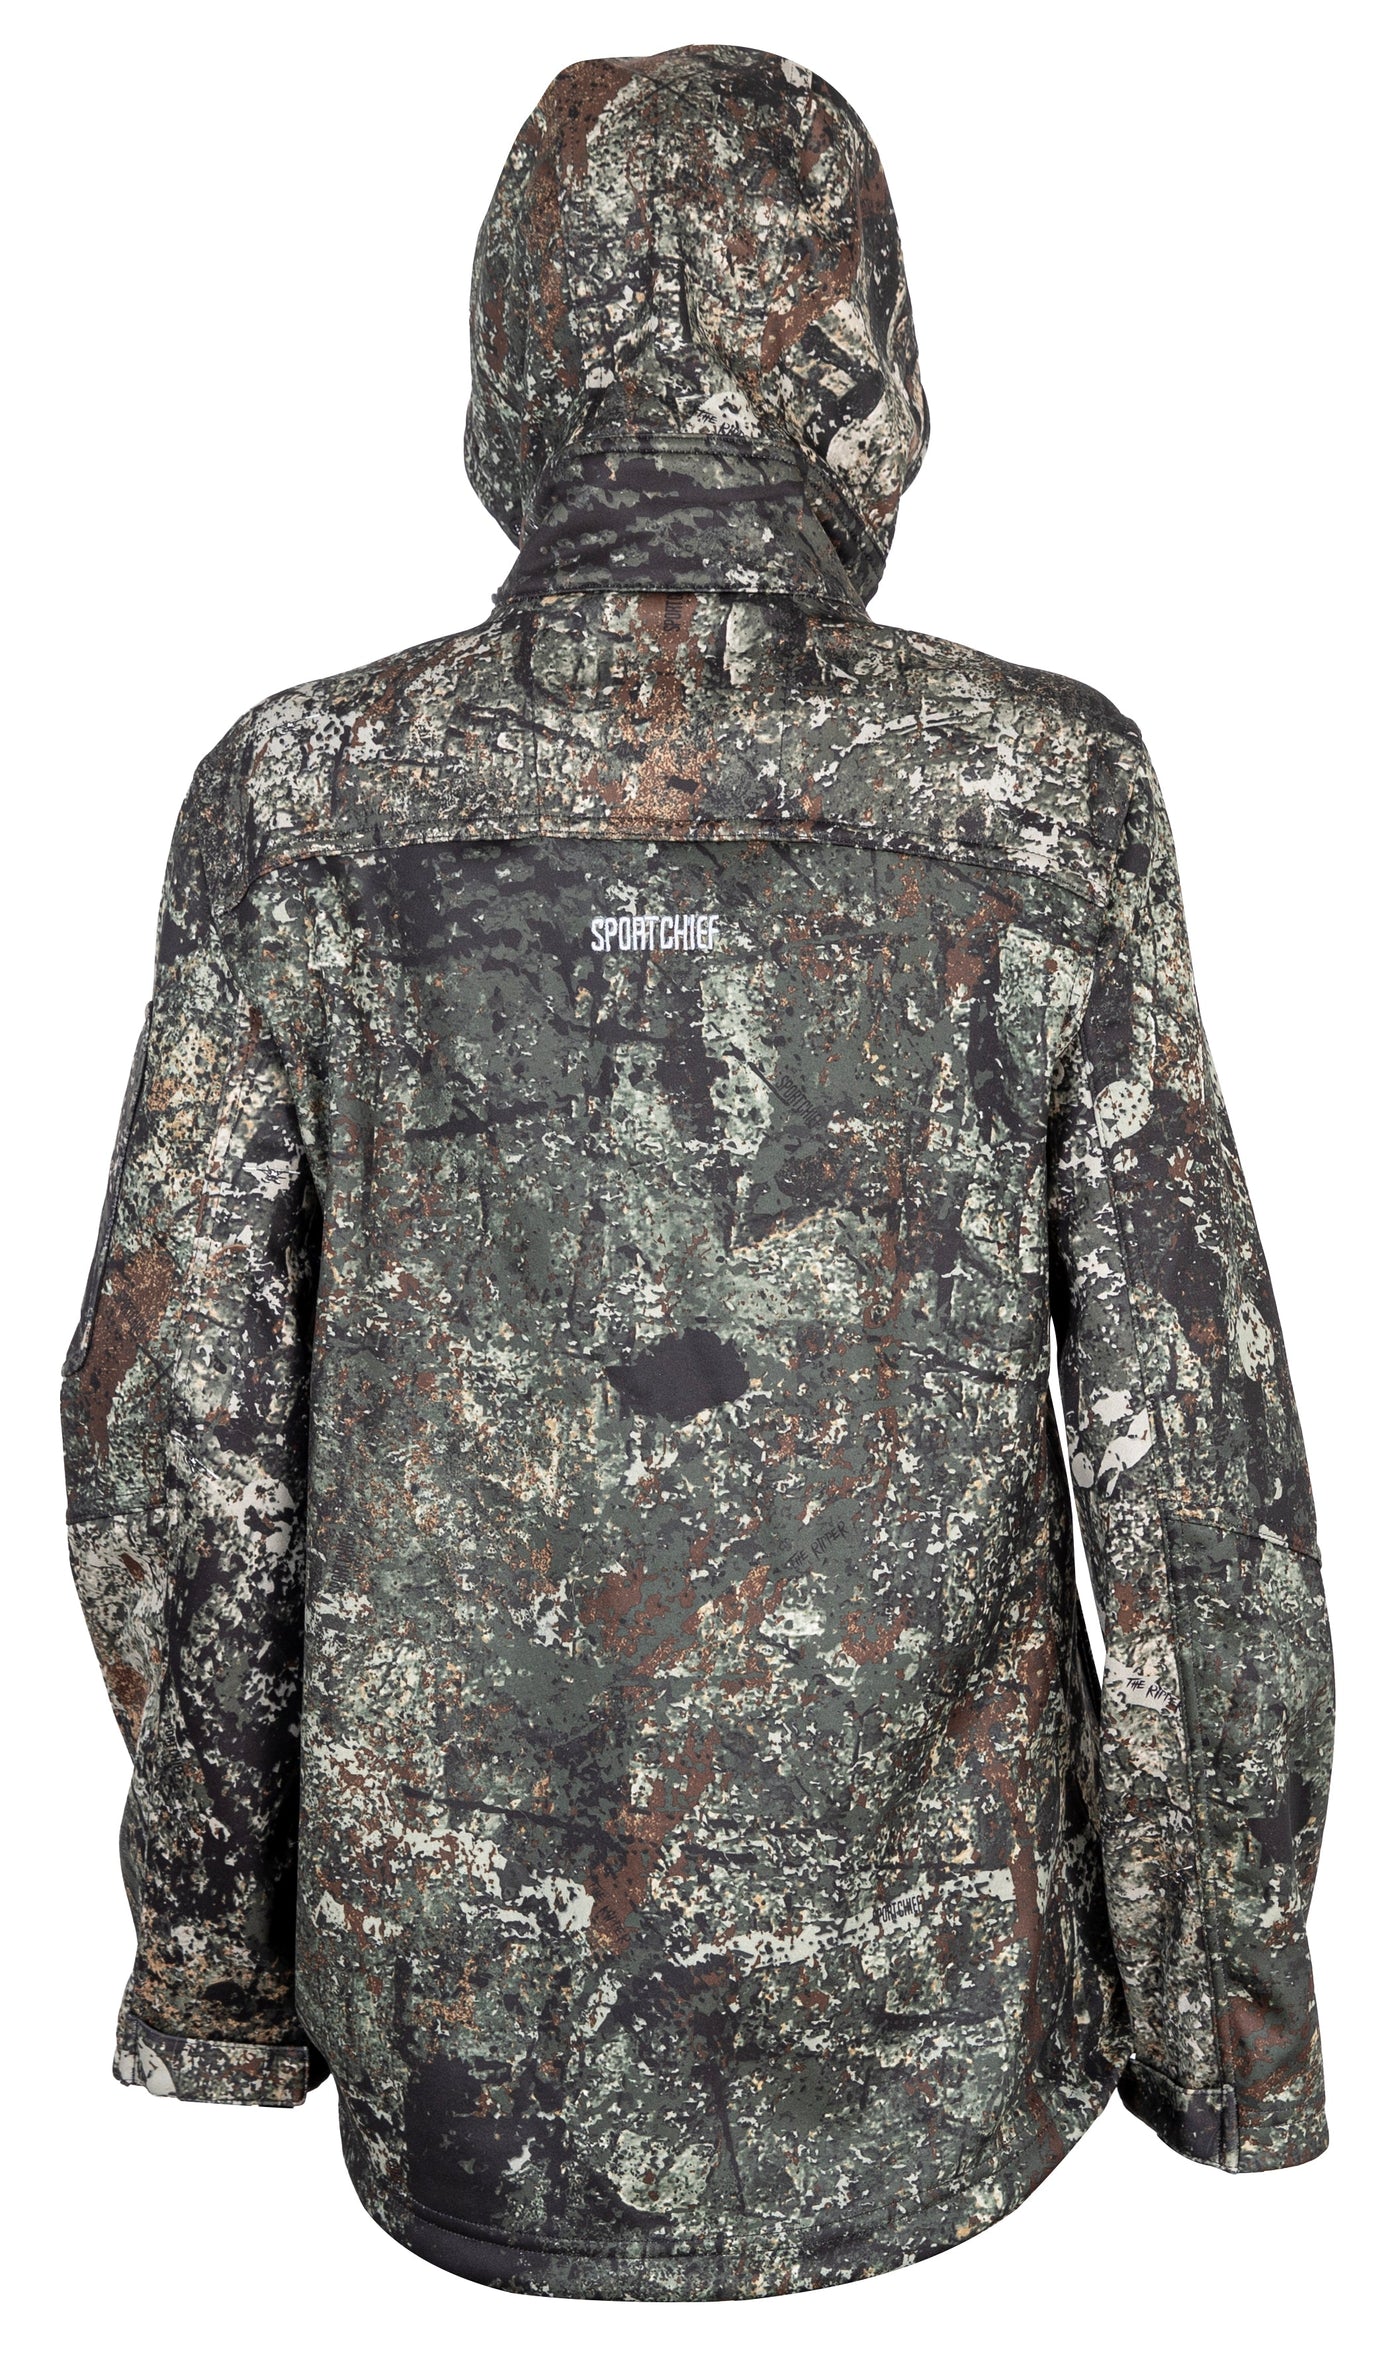 Women's camo hunting coat "Hunting Beast" Collection Jason T. Morneau